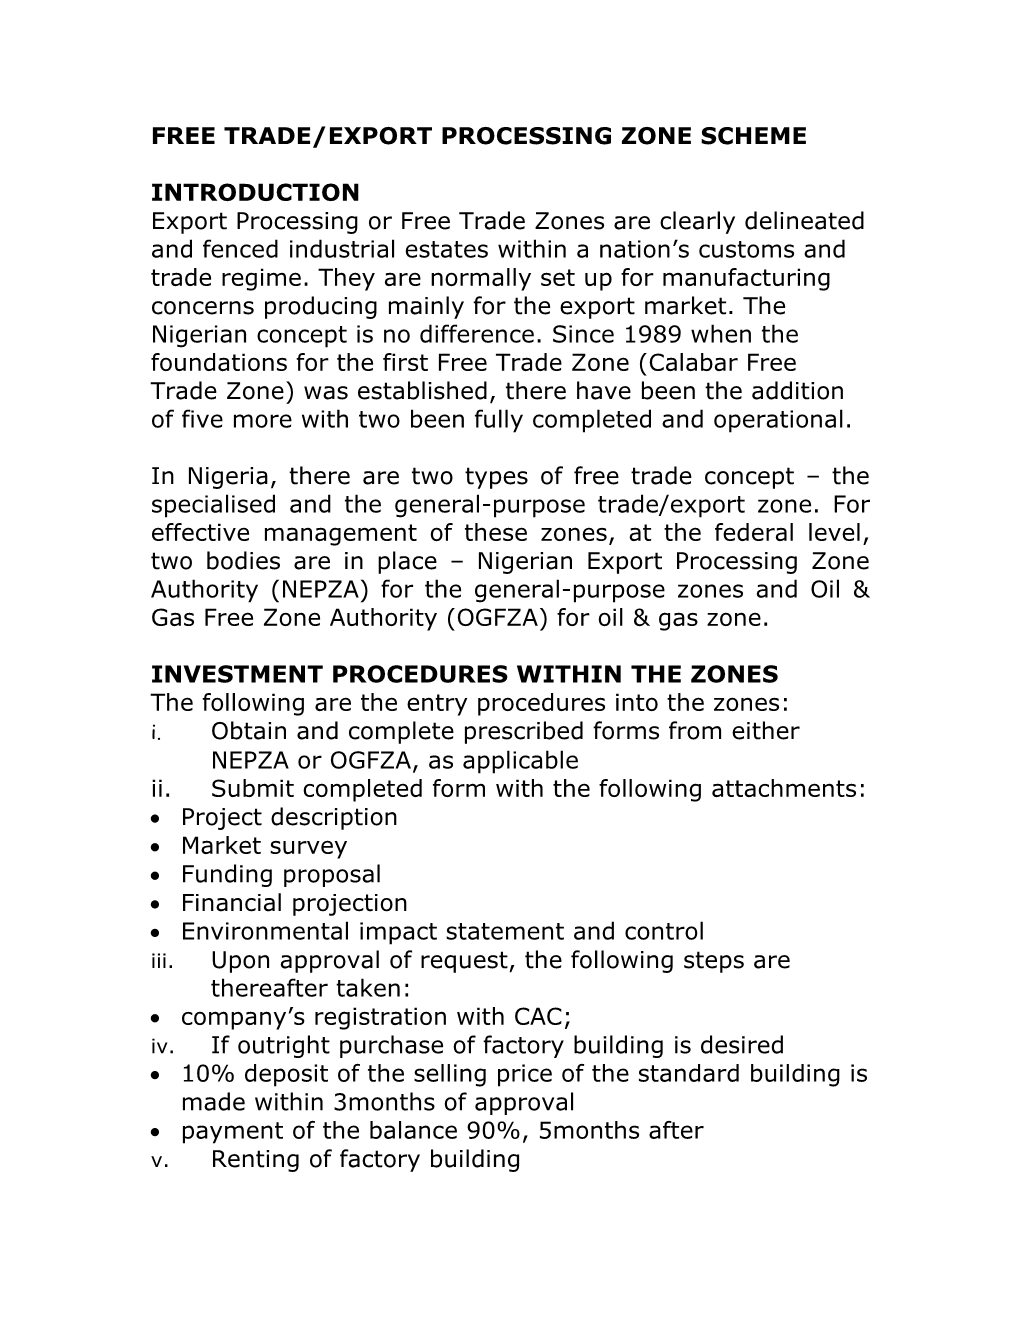 Free Trade/Export Processing Zone Scheme